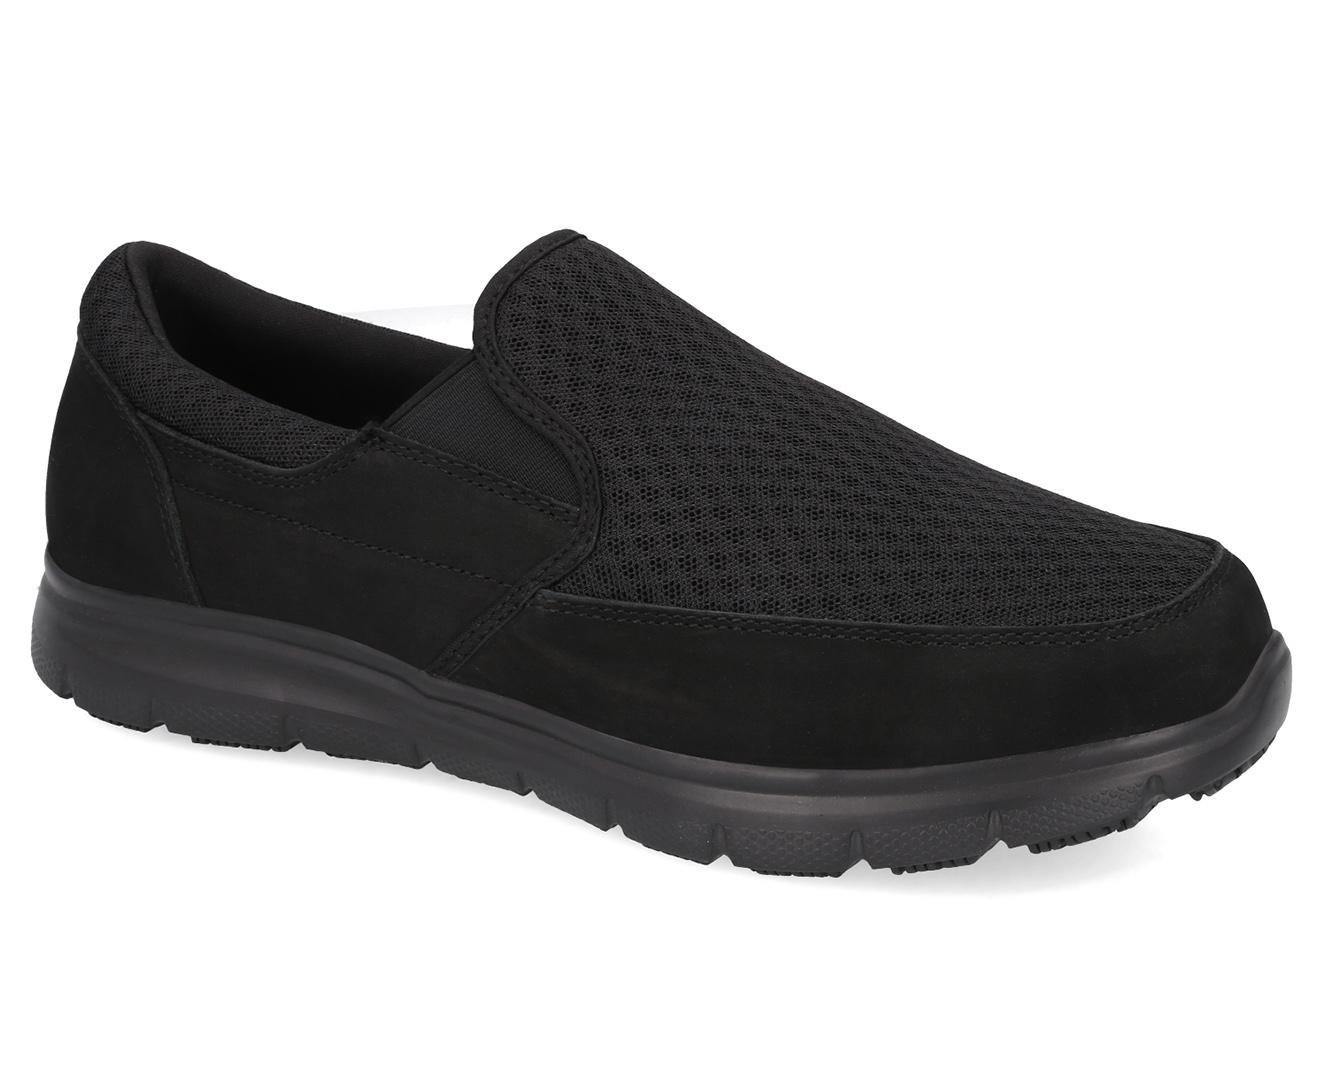 Bata Women's Slip-On Slip Resistant Delta Non Safety Shoes - Black ...